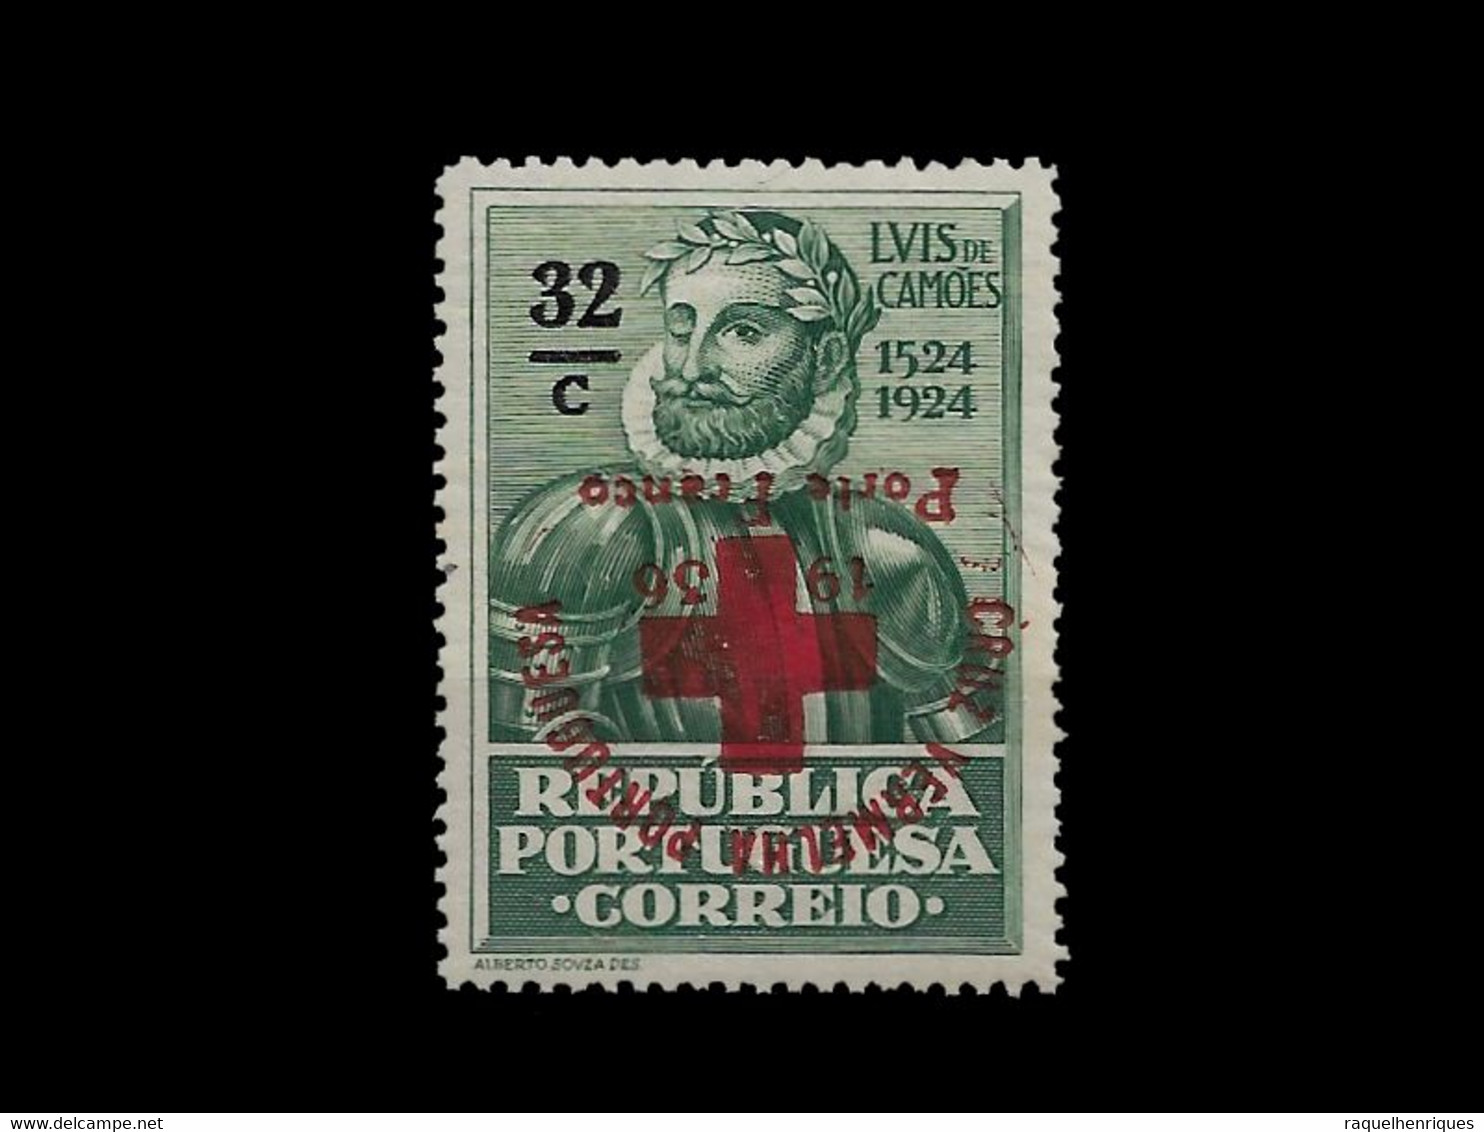 PORTUGAL PORTE FRANCO - 1936 ERROR UPSIDE DOWN SURCHARGED MNH (PLB#01-135) - Nuovi